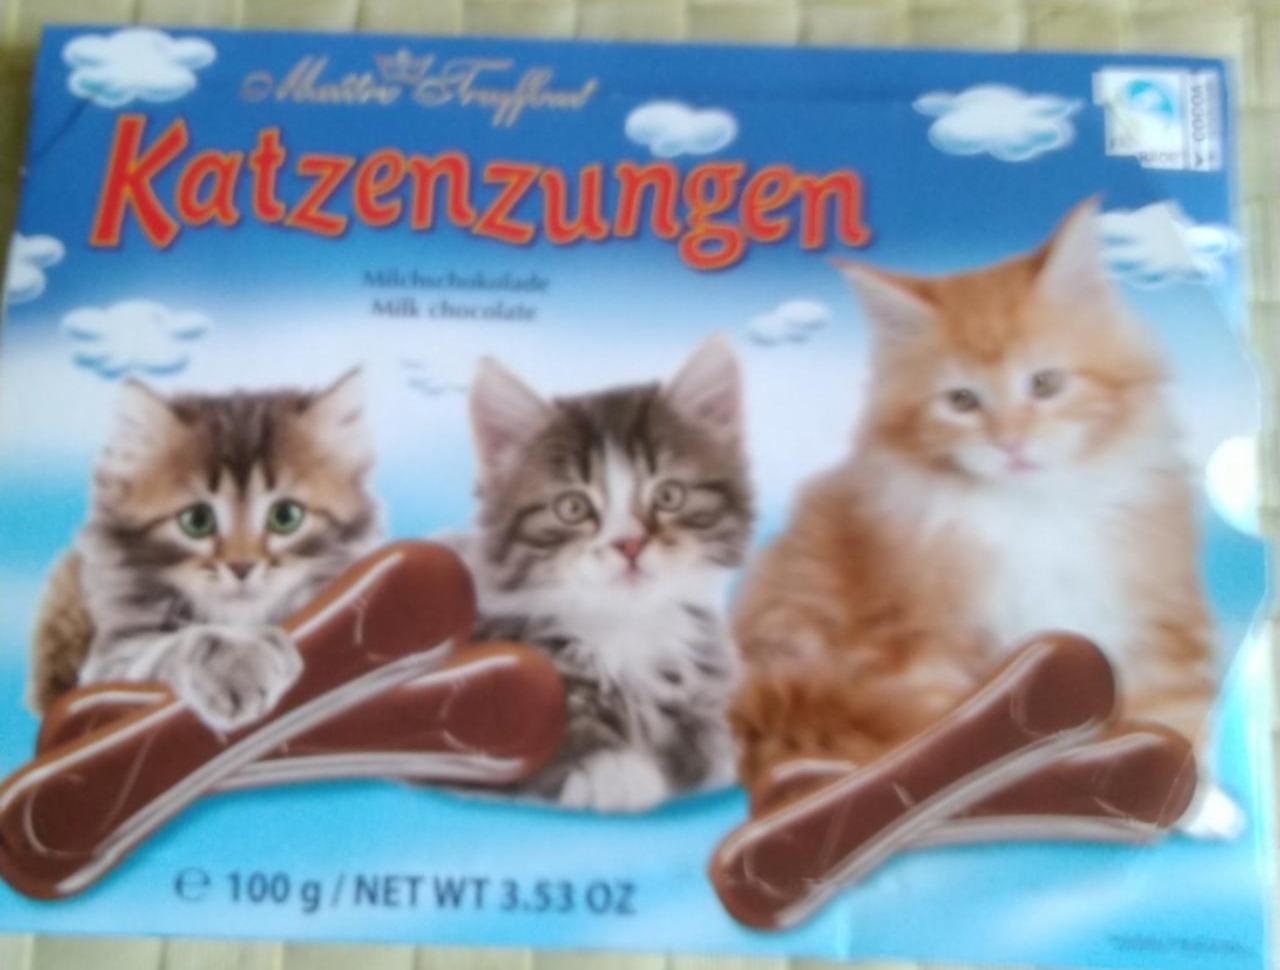 Képek - Katzenzungen Milk chocolate Maître Truffout